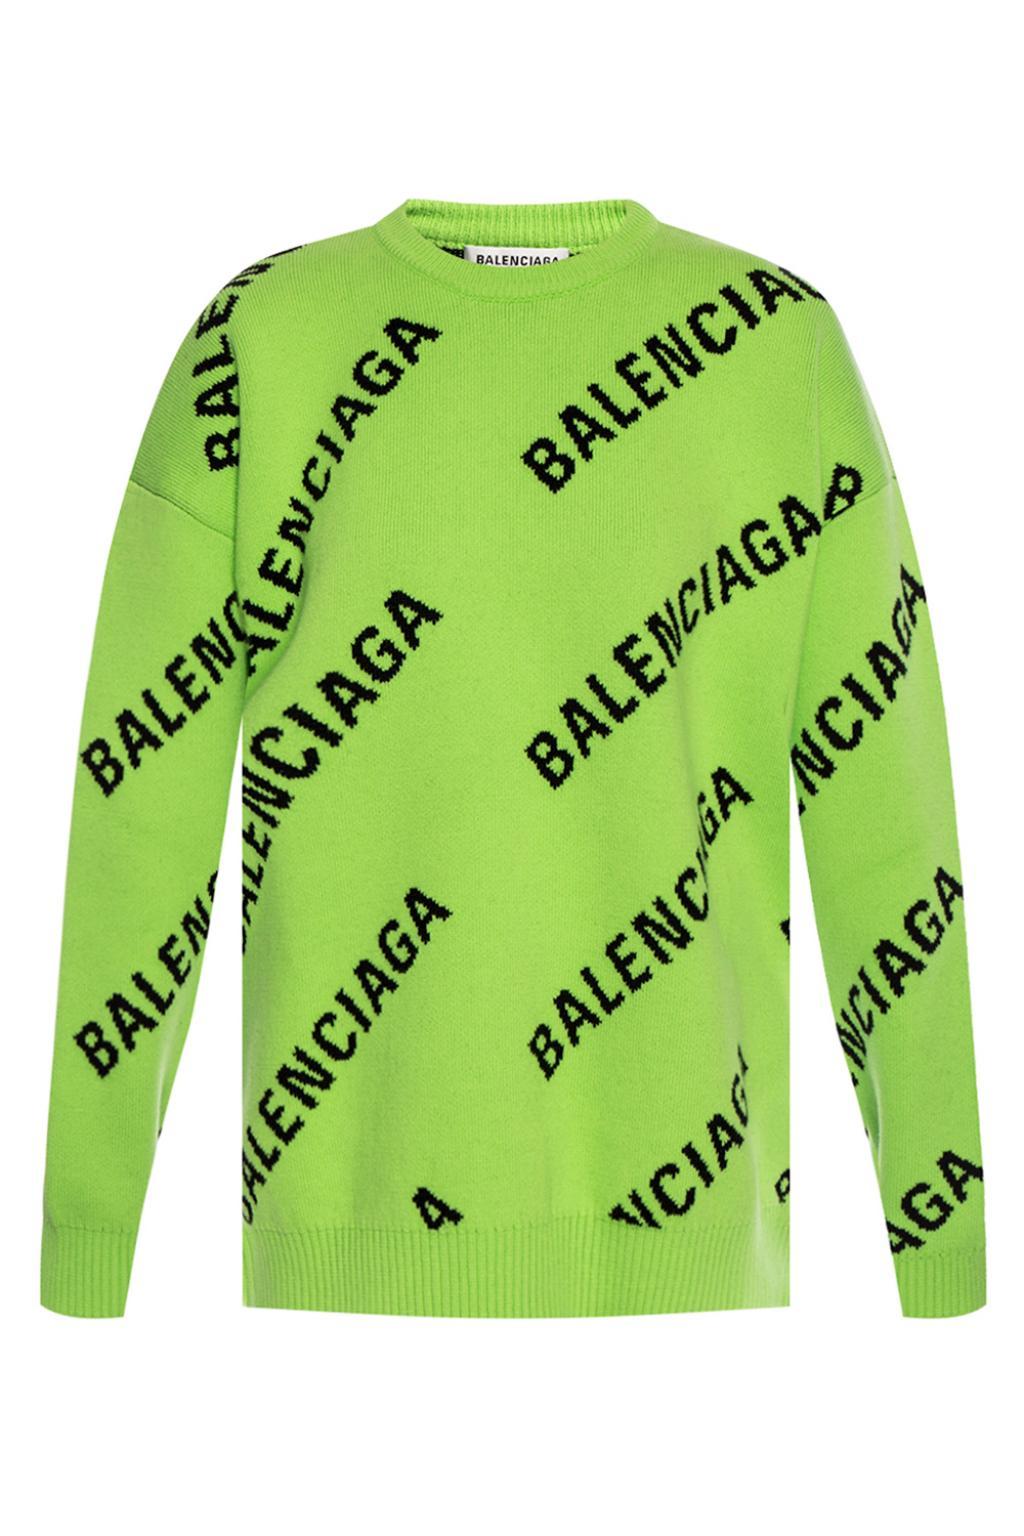 Balenciaga Oversized Intarsia Cotton-blend Sweater in Green Lyst